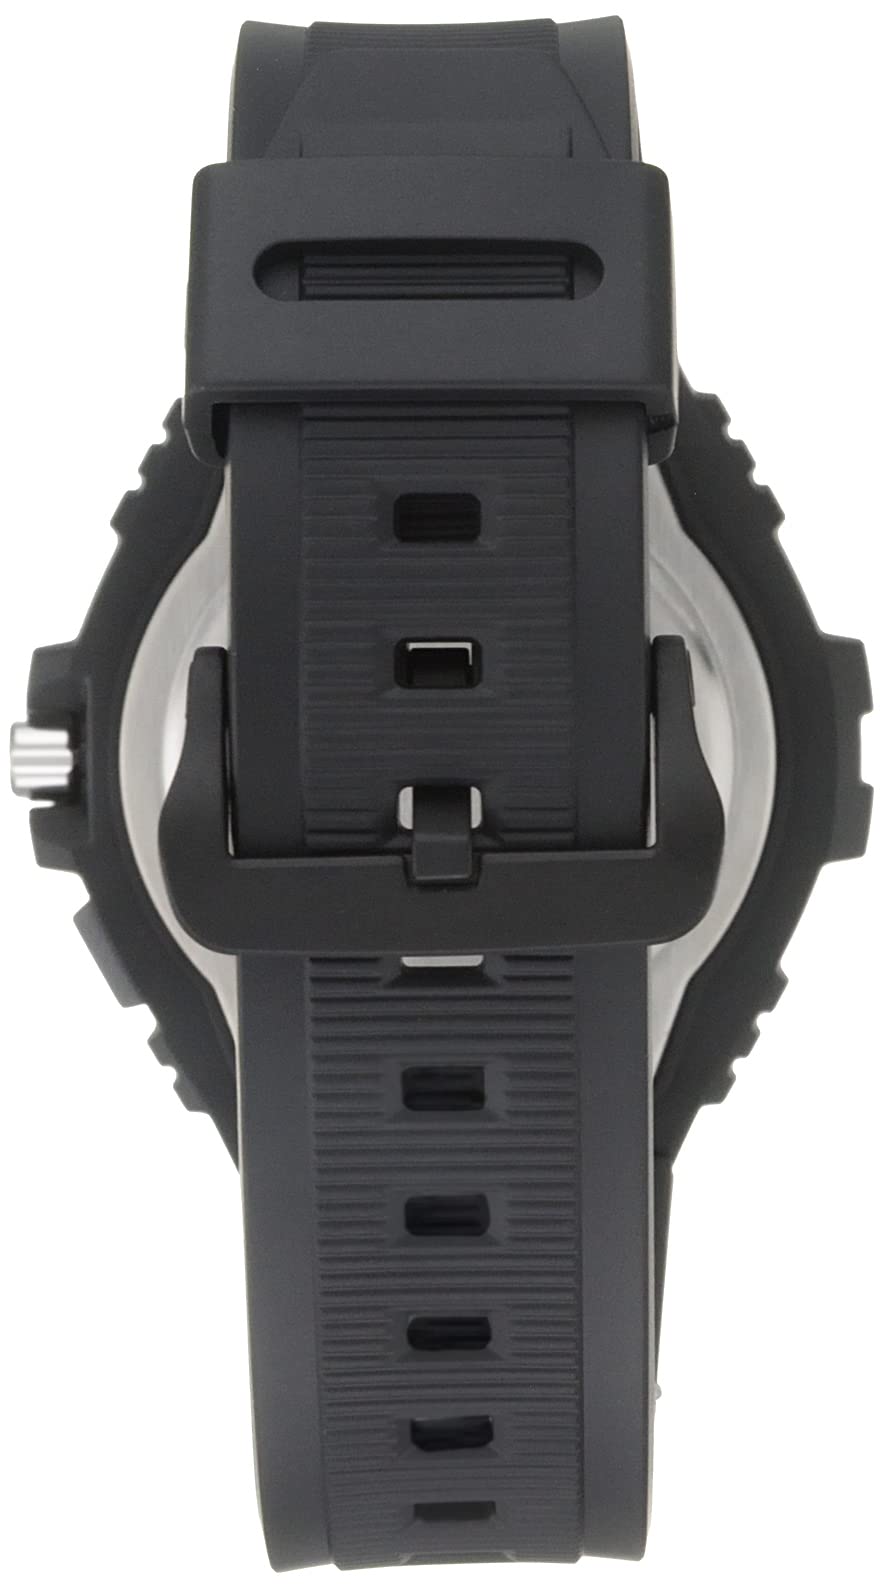 Casio Illuminator Men's Quartz Sport Watch with Black Resin Strap Heavy Duty Metal Bezel Model: MWA100H-1A2V Silver-Tone